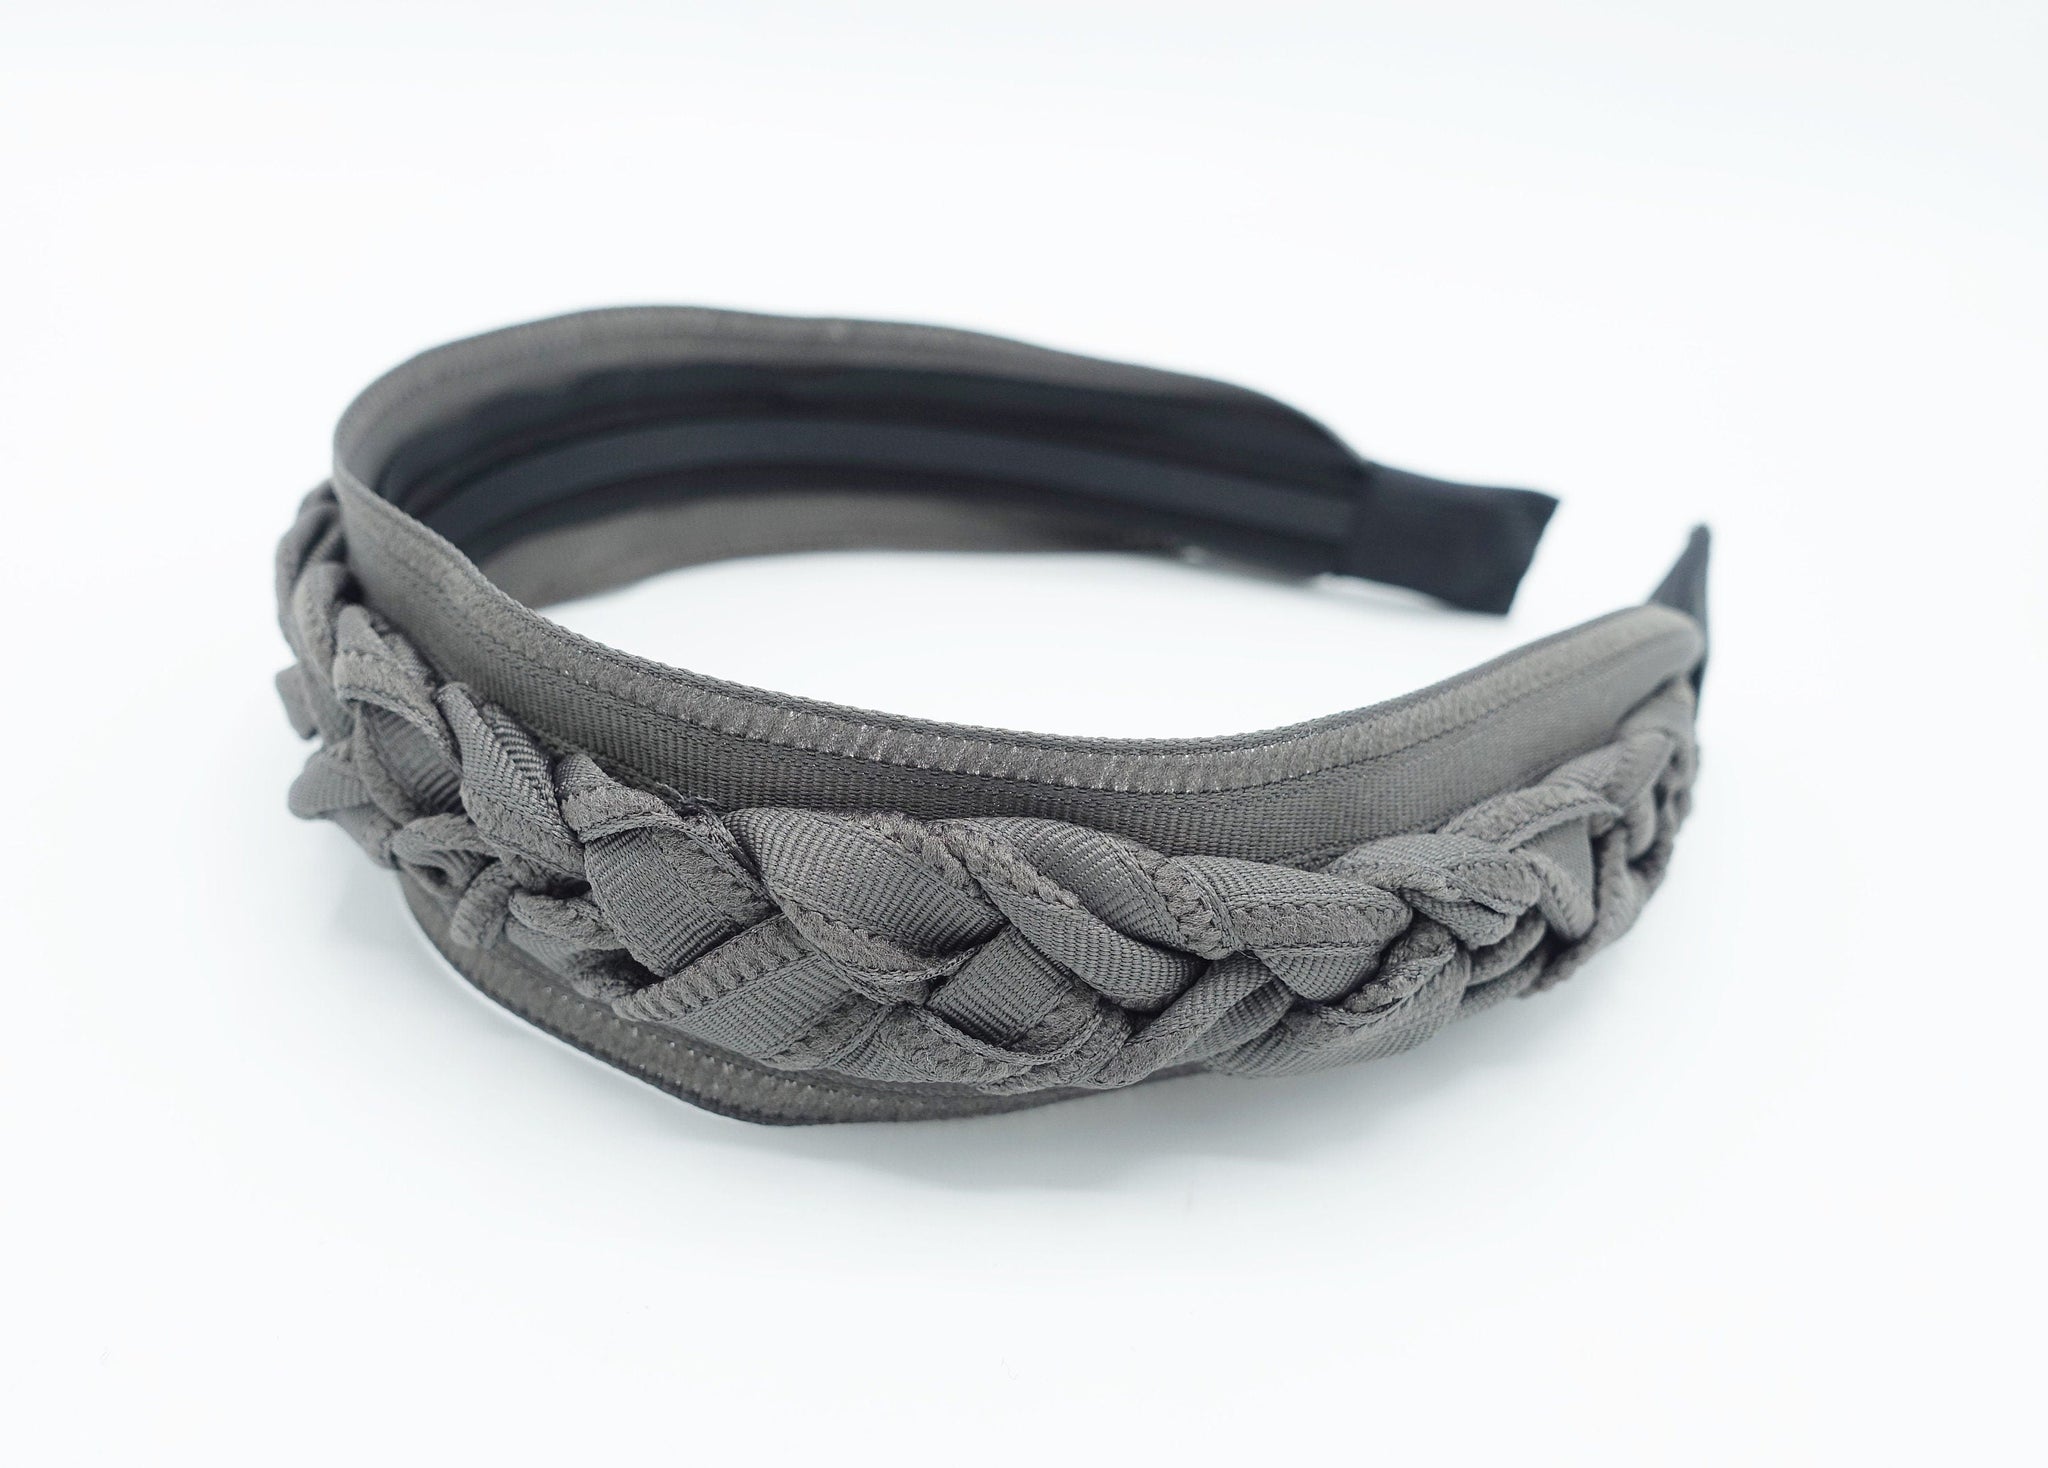 veryshine.com Headband Gray grosgrain braided strap headband added on women headband